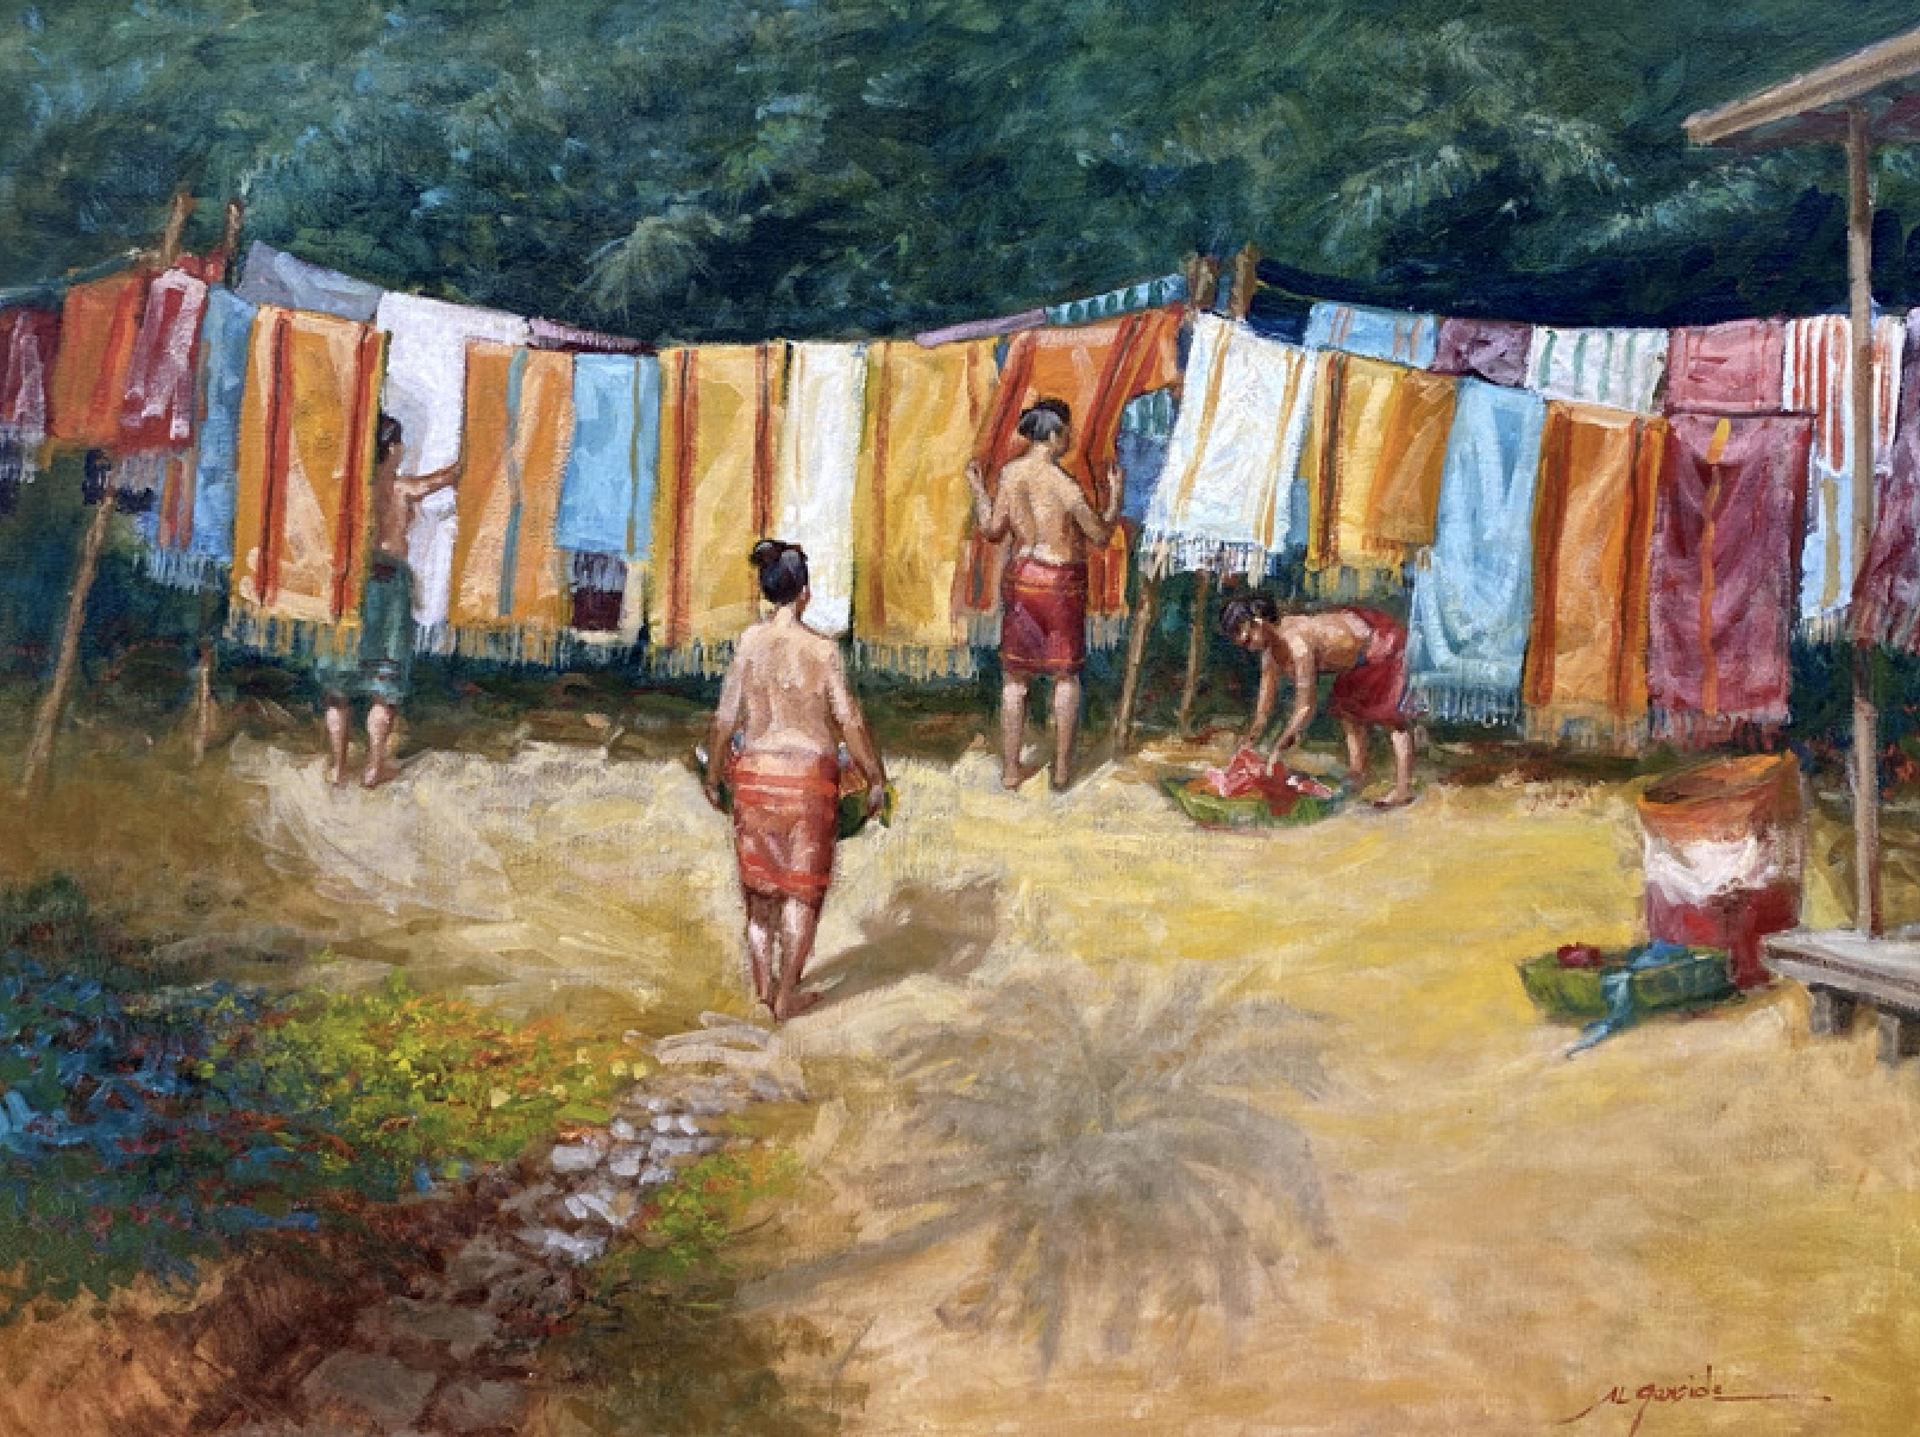 Laundry Day by A. LaMoyne Garside